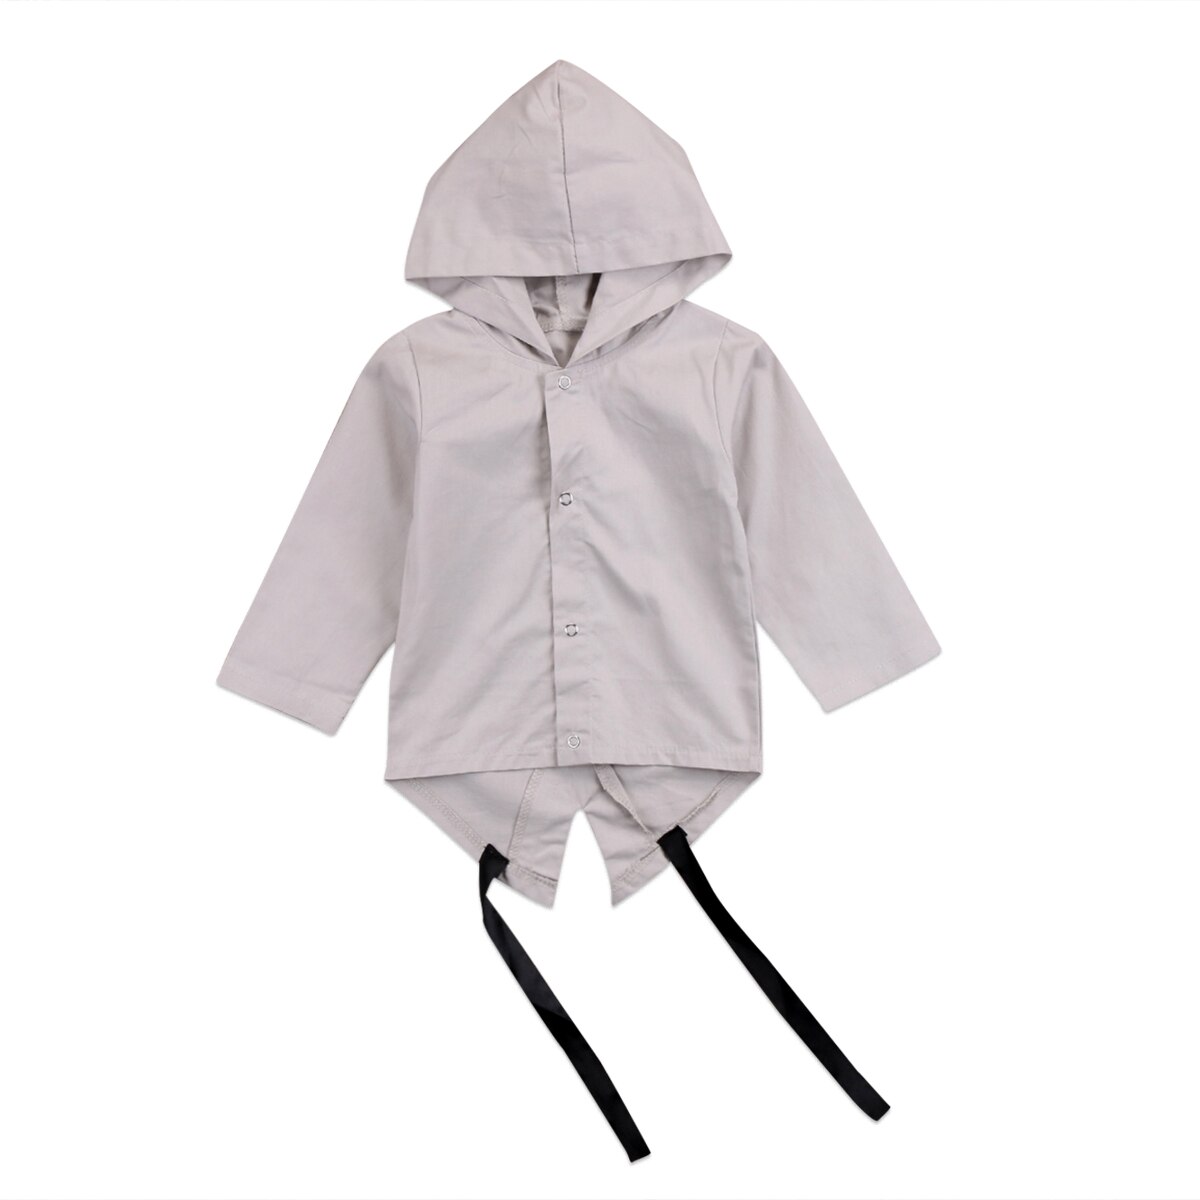 Nyfødt baby dreng kid top windbreaker hætteklædte outwear frakke jakke overfrakke tøj: Grå / 18m